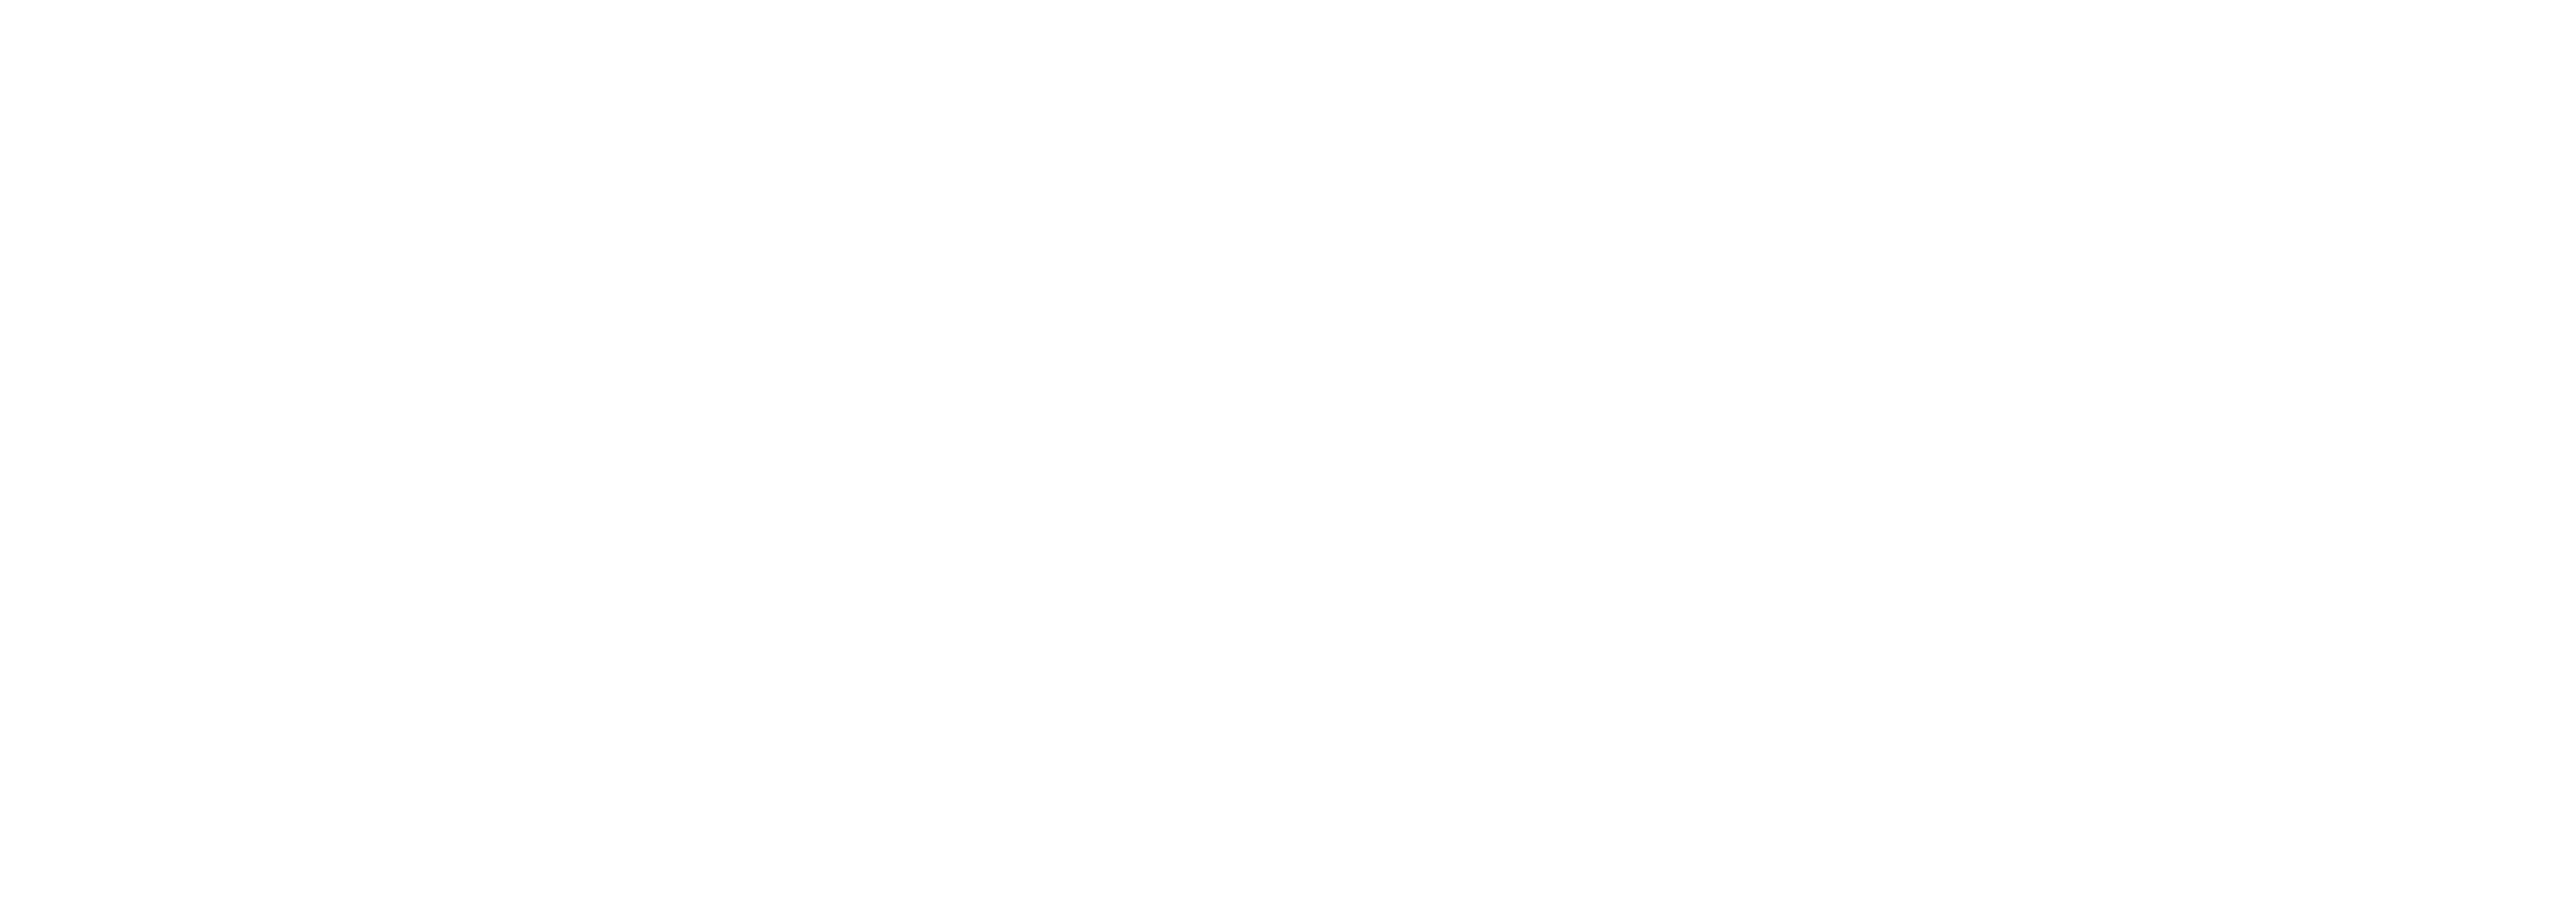 Pizpireta Villa Rural